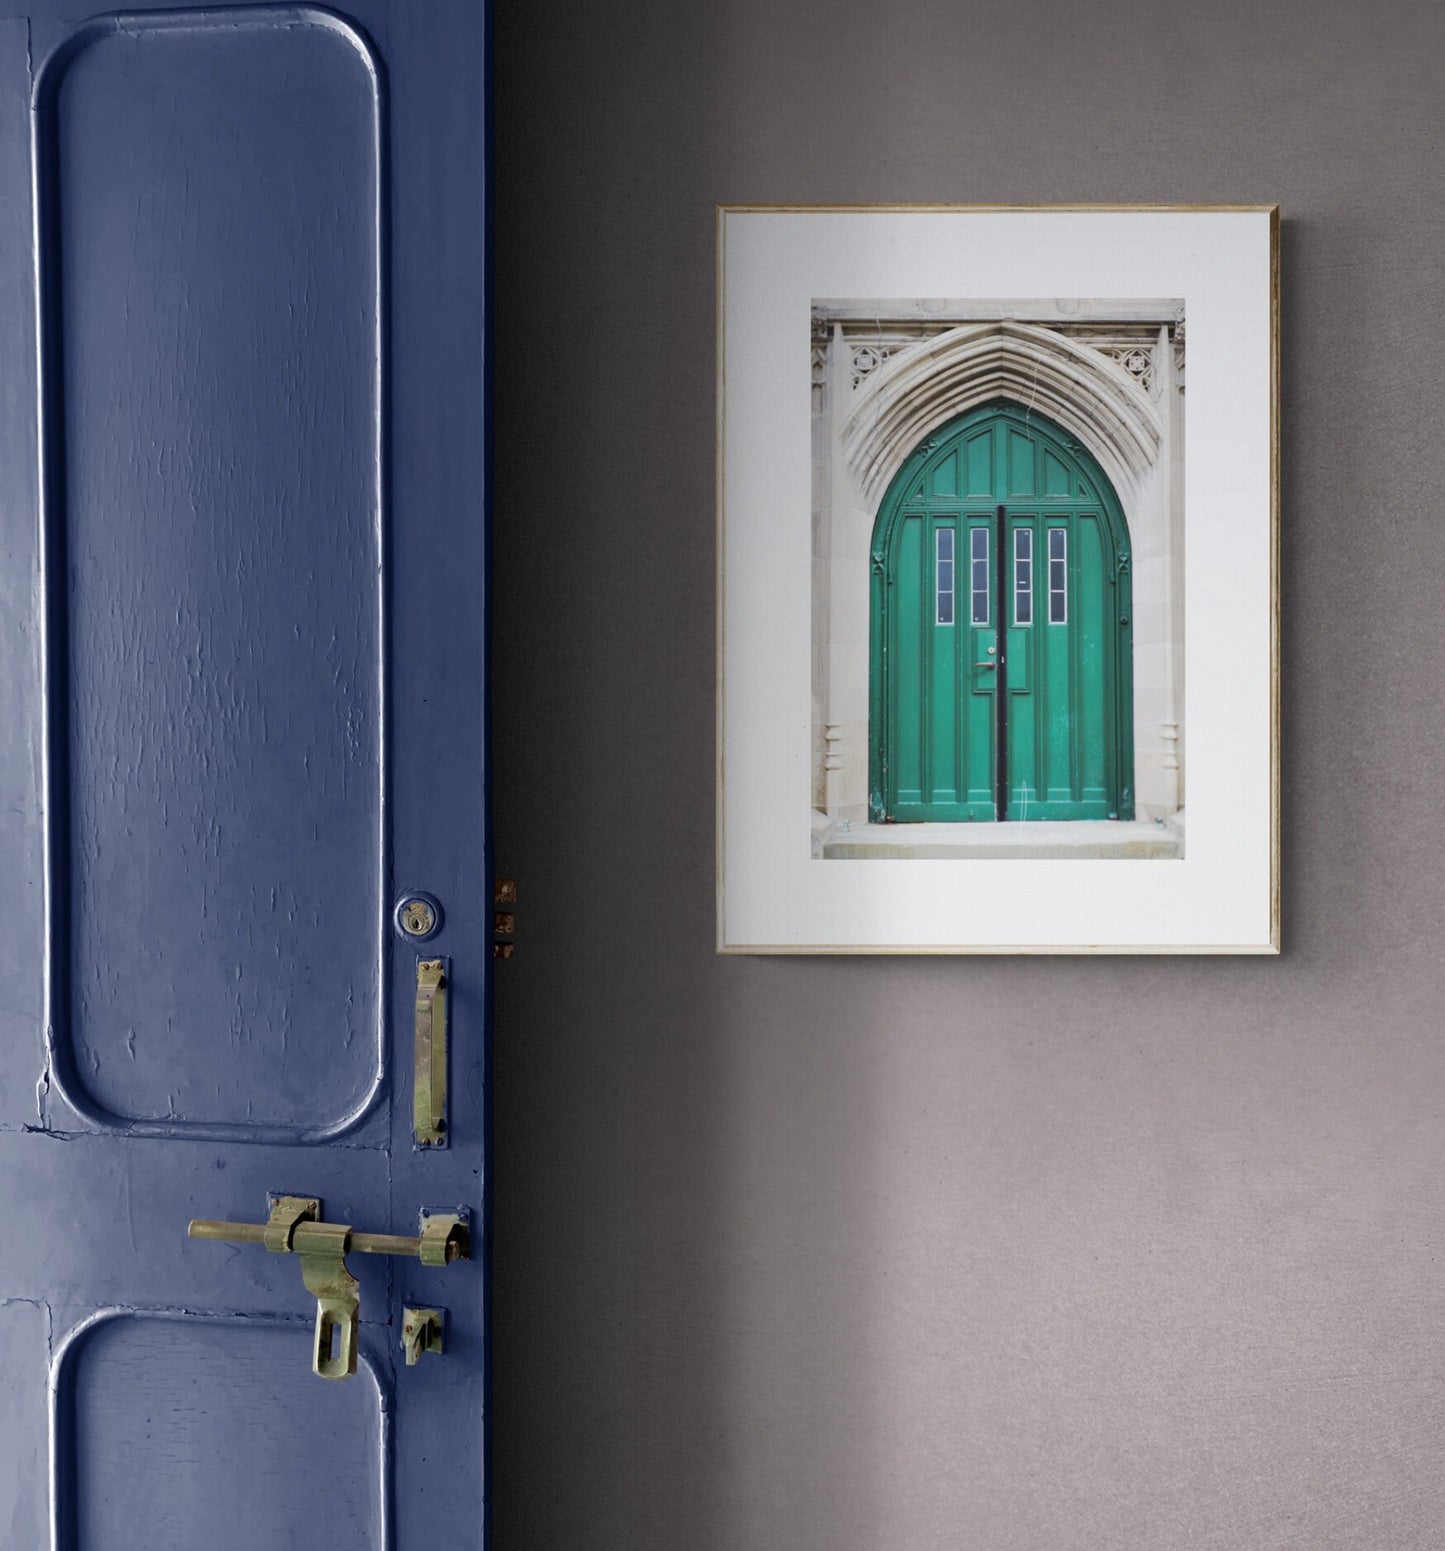 Gothic Green Door Photograph Print in an entryway as wall art